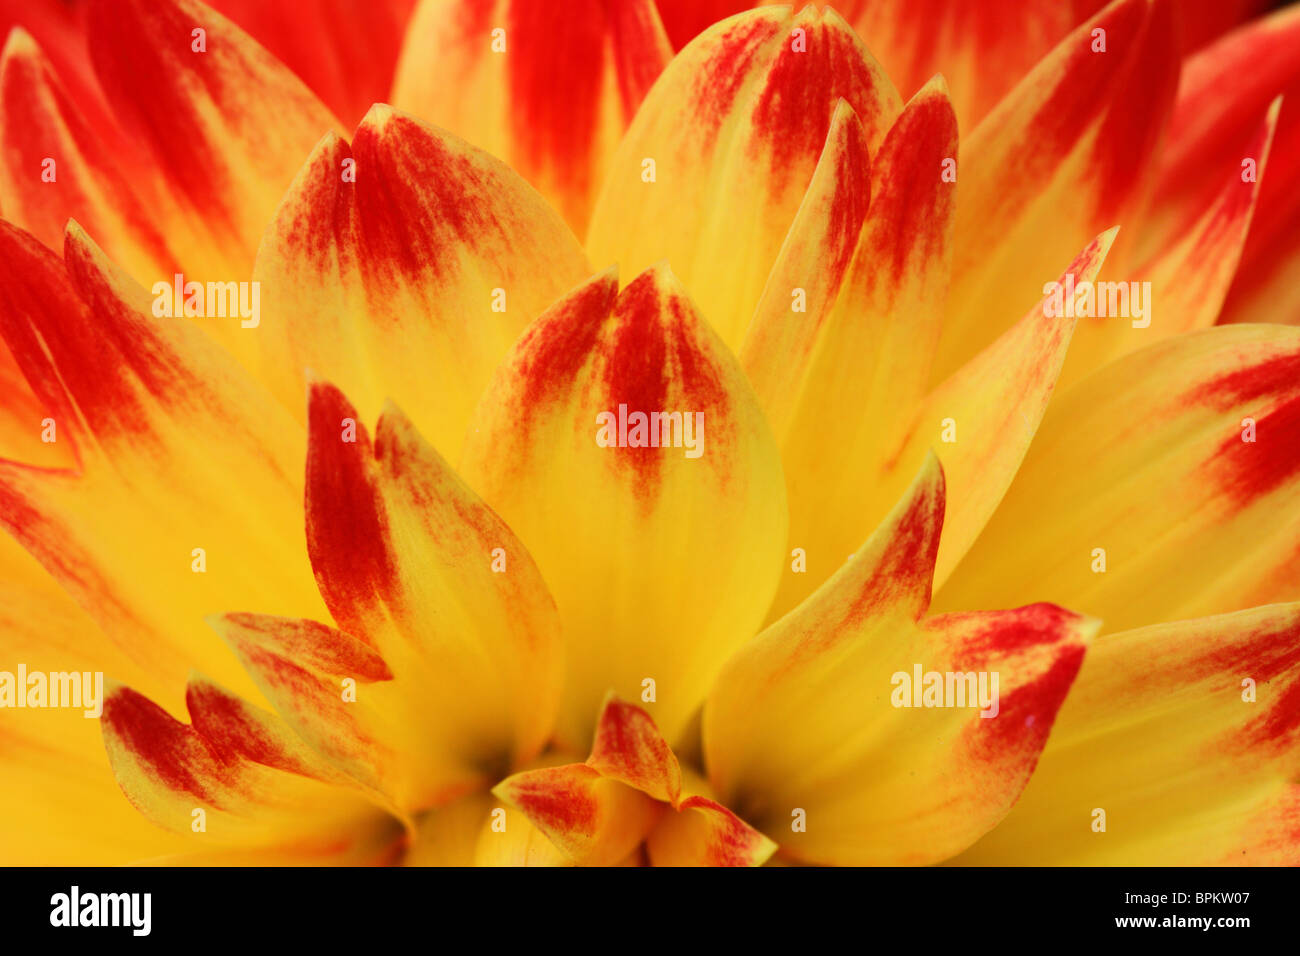 Yellow red dahlia flower petals close up Stock Photo